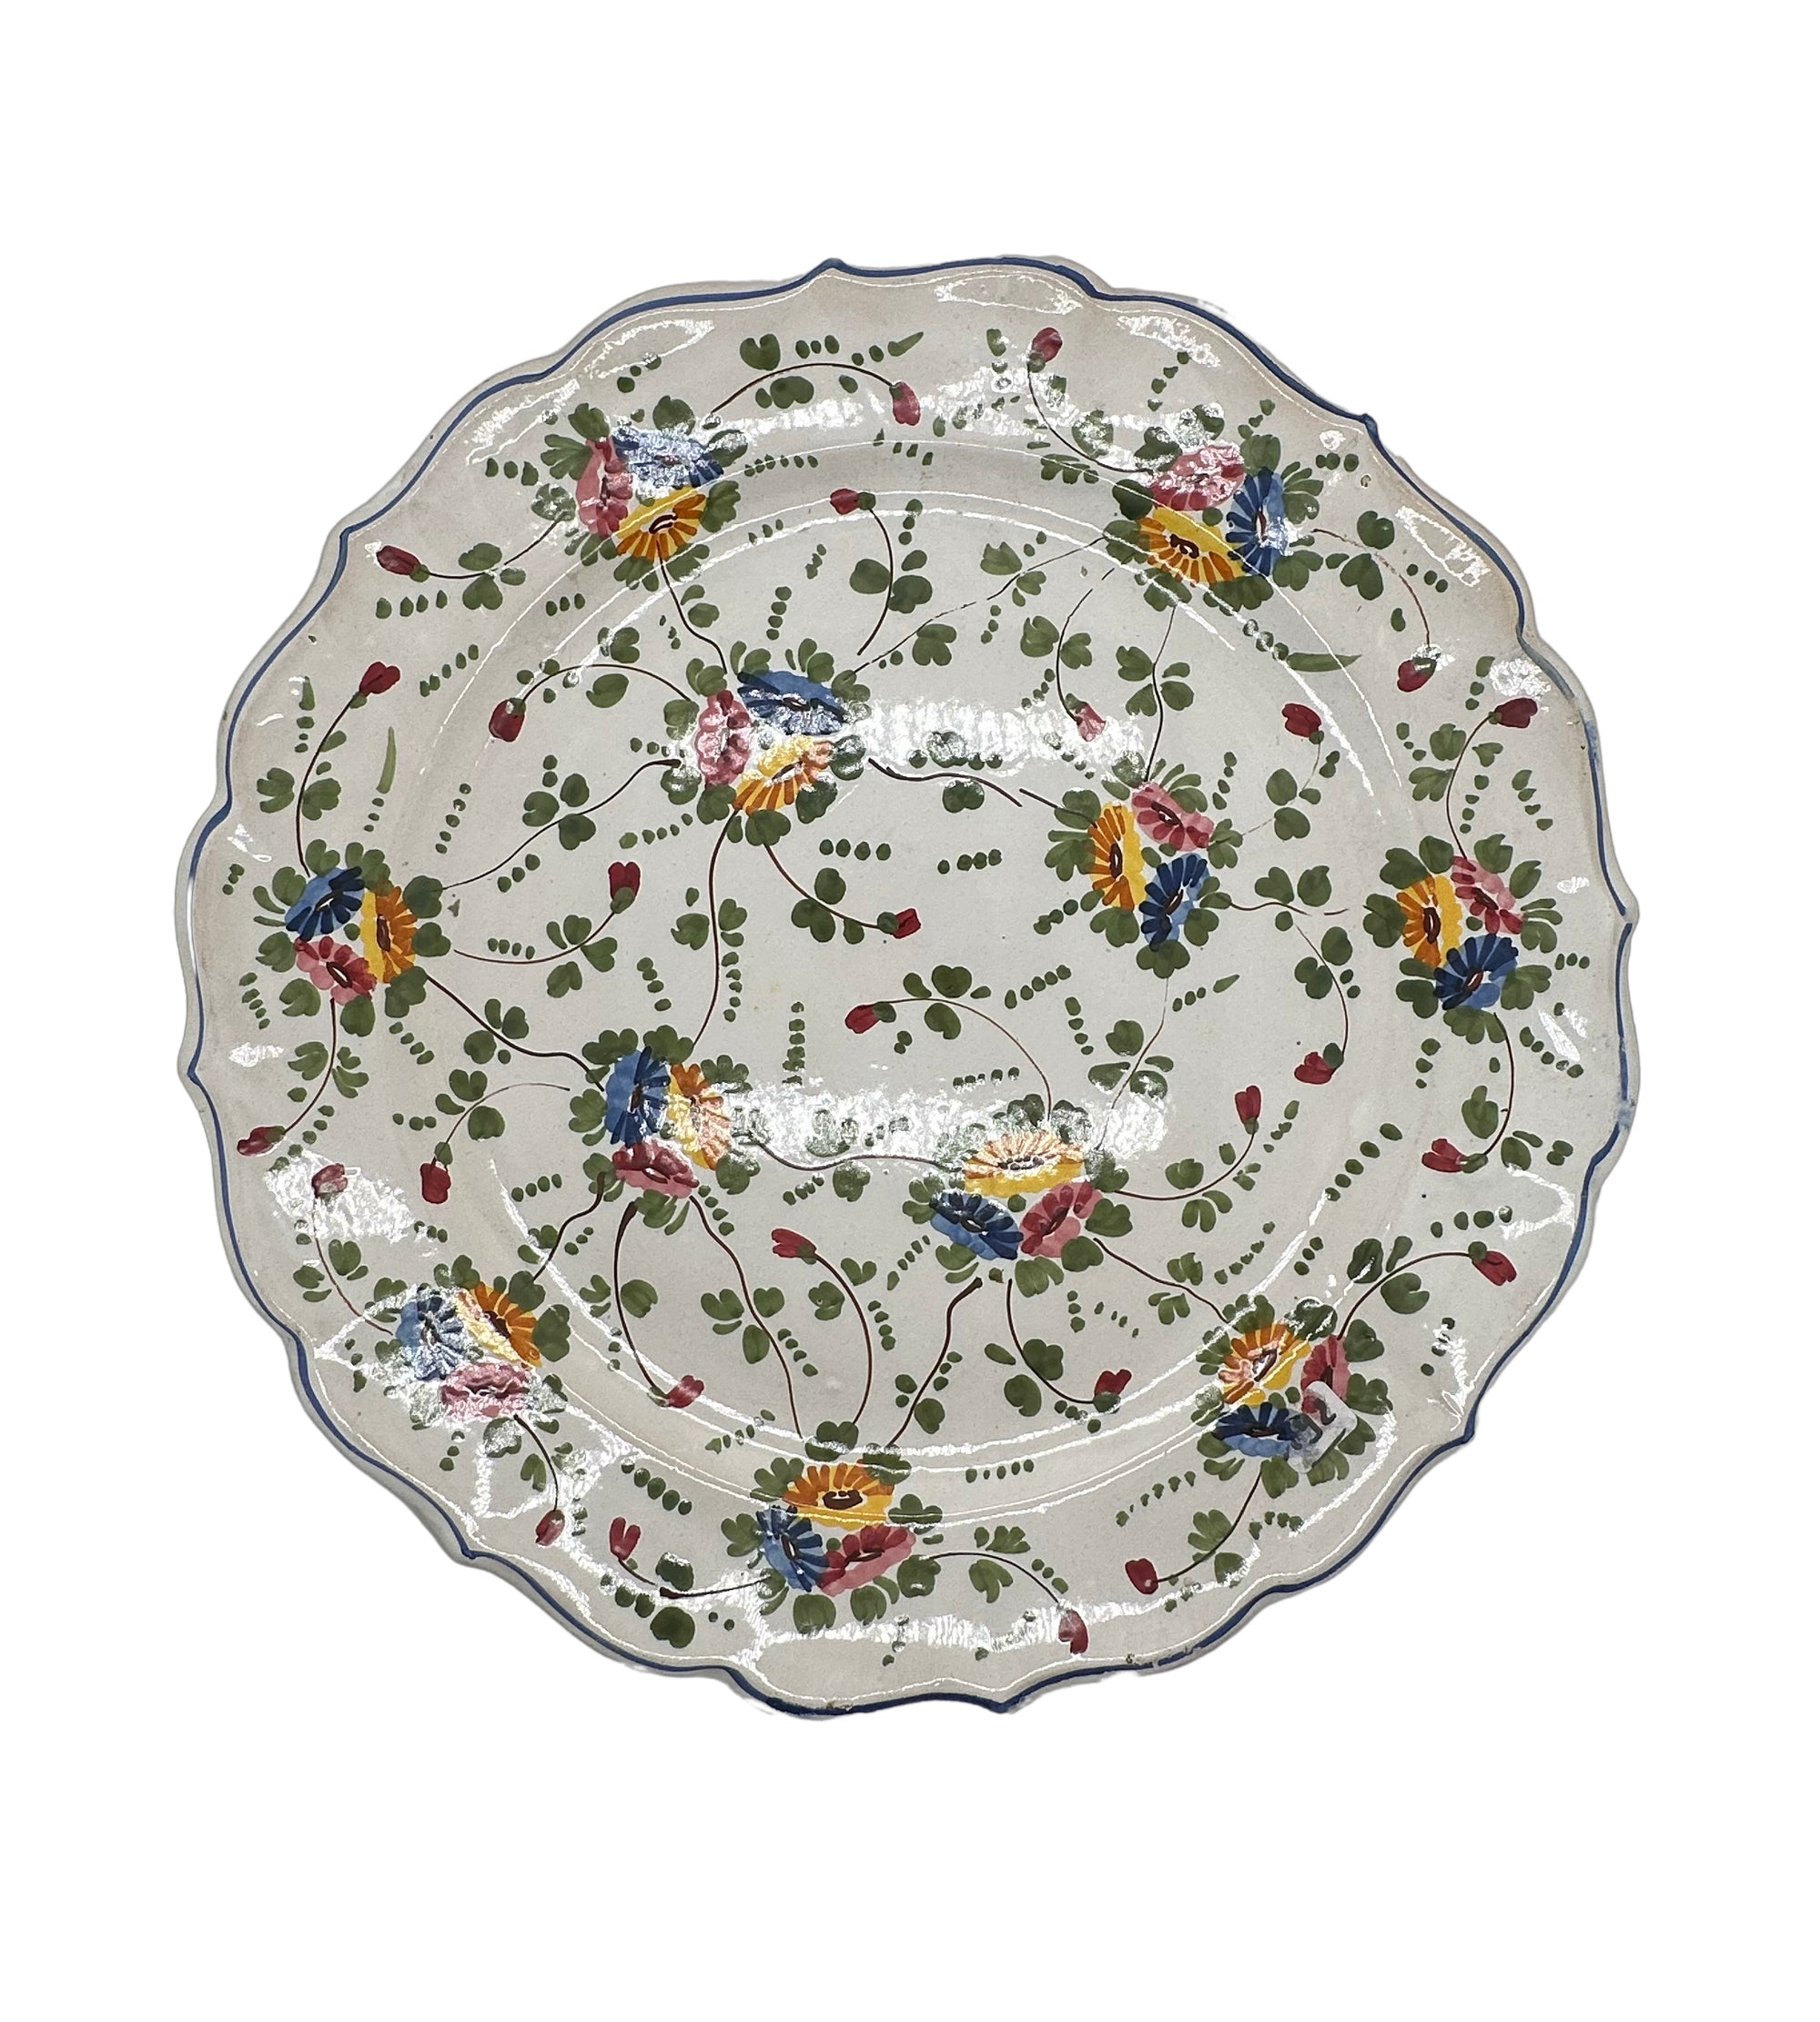 Vintage Floral Round Italian Platter - Hunt and Bloom